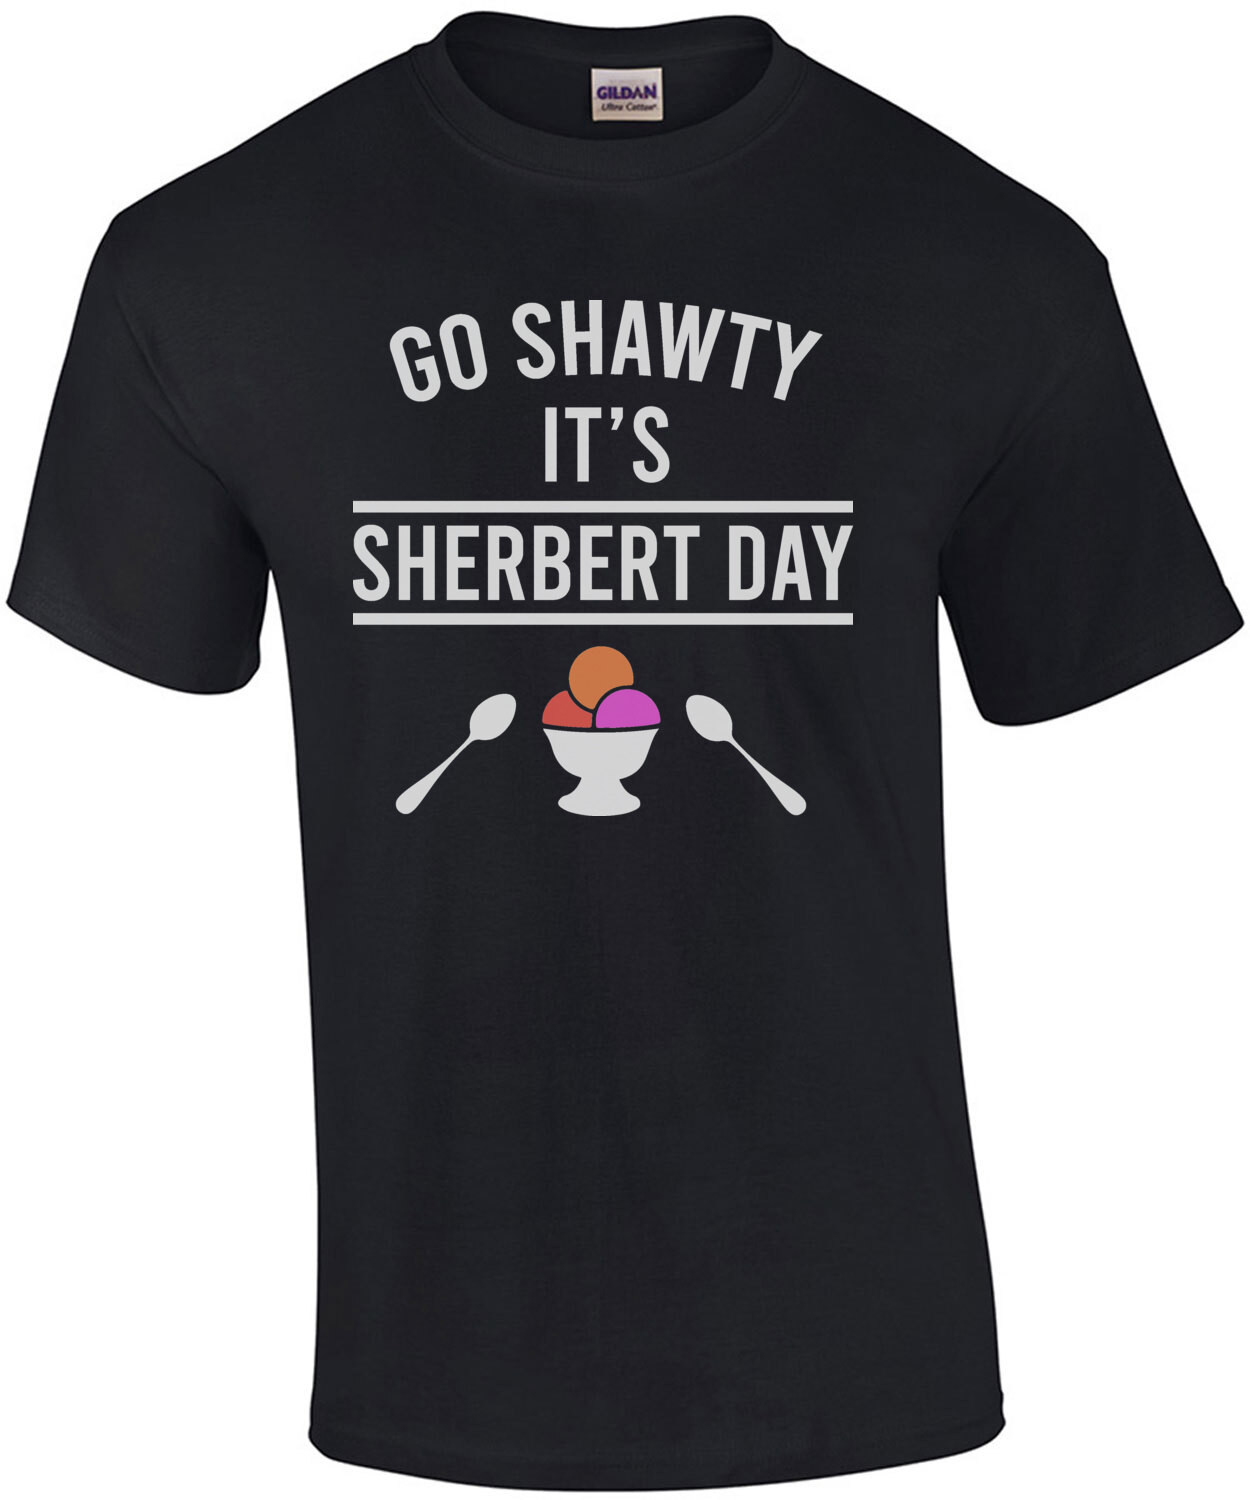 Go Shawty It's Sherbert Day - funny pun t-shirt